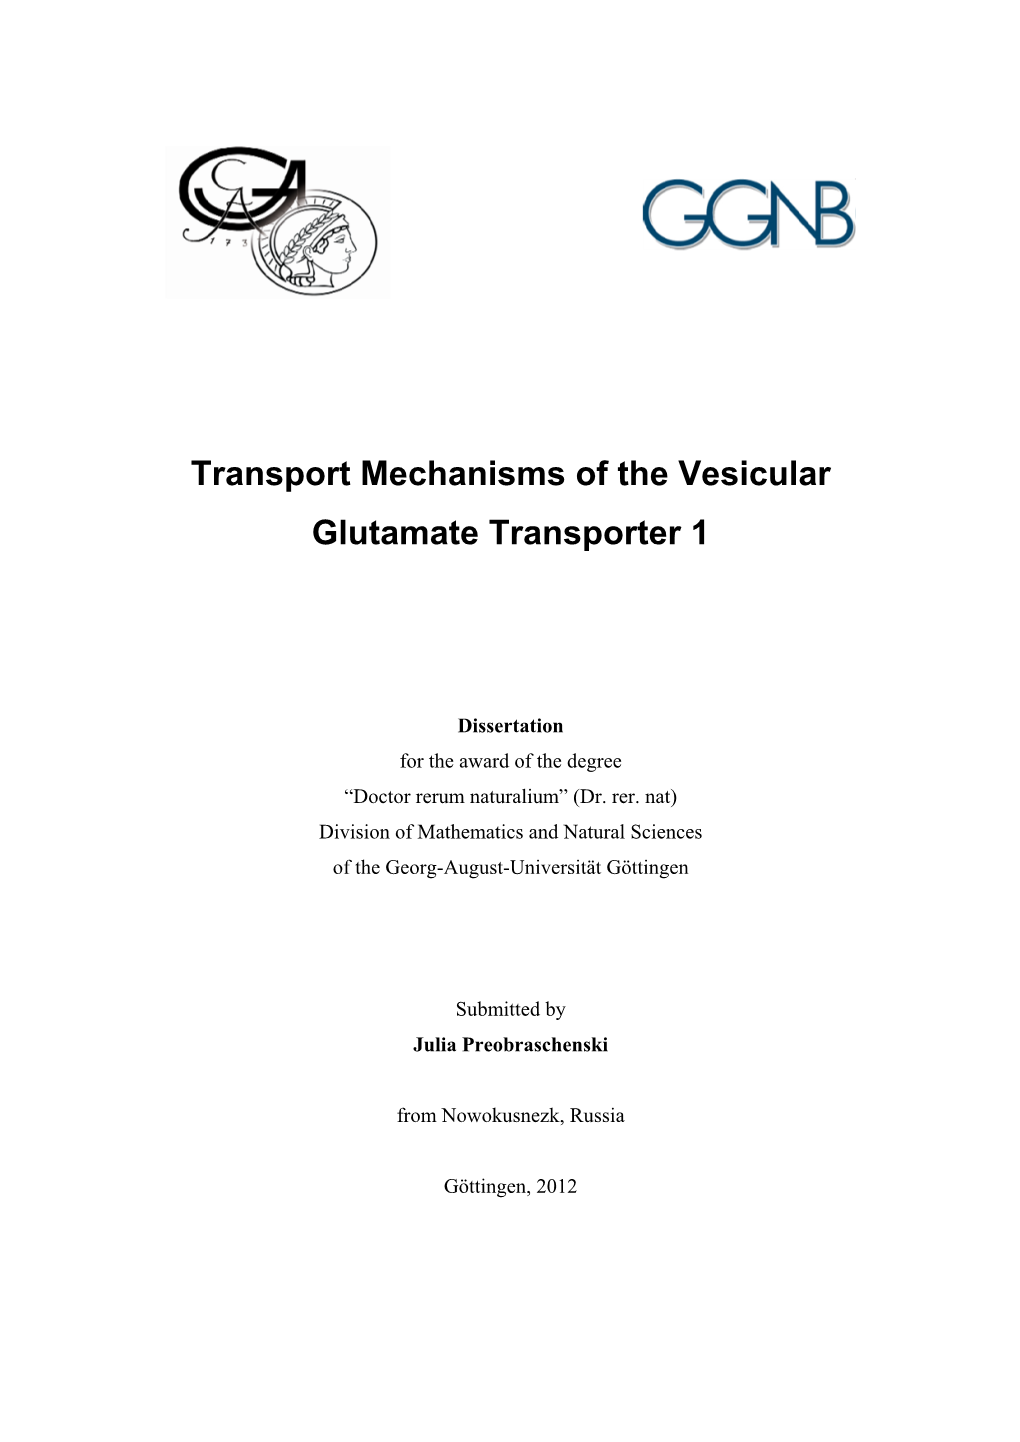 Transport Mechanisms of the Vesicular Glutamate Transporter 1